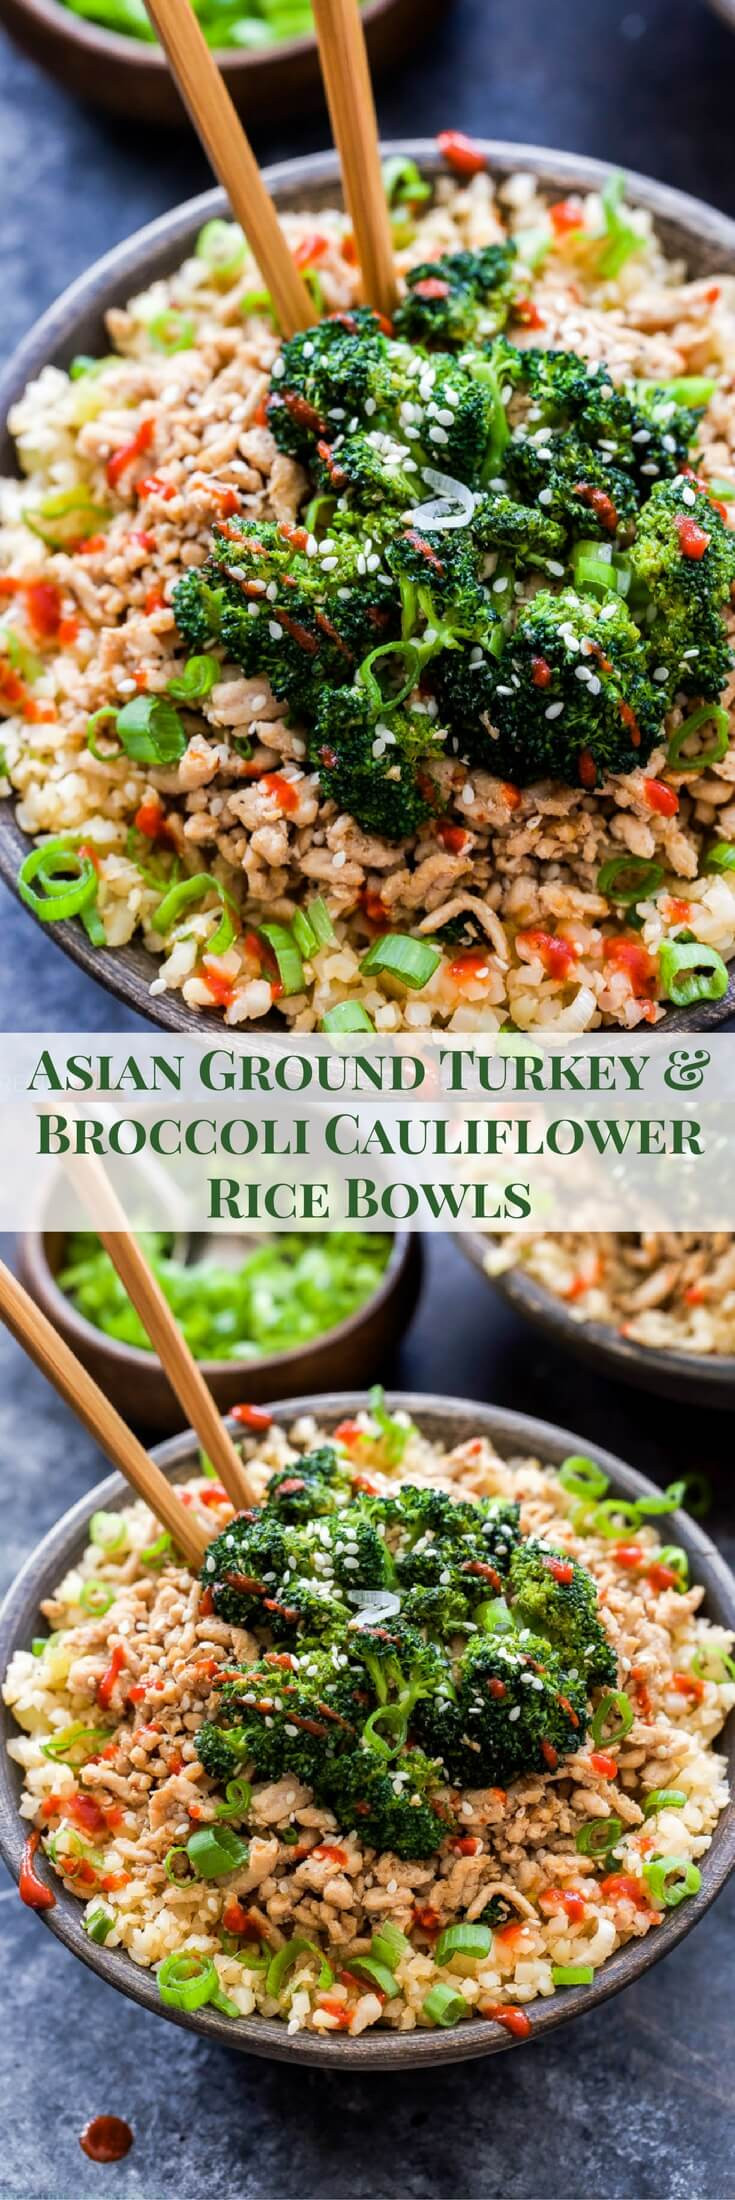 Ground Turkey And Broccoli Recipes
 Asian Ground Turkey and Broccoli Cauliflower Rice Bowls